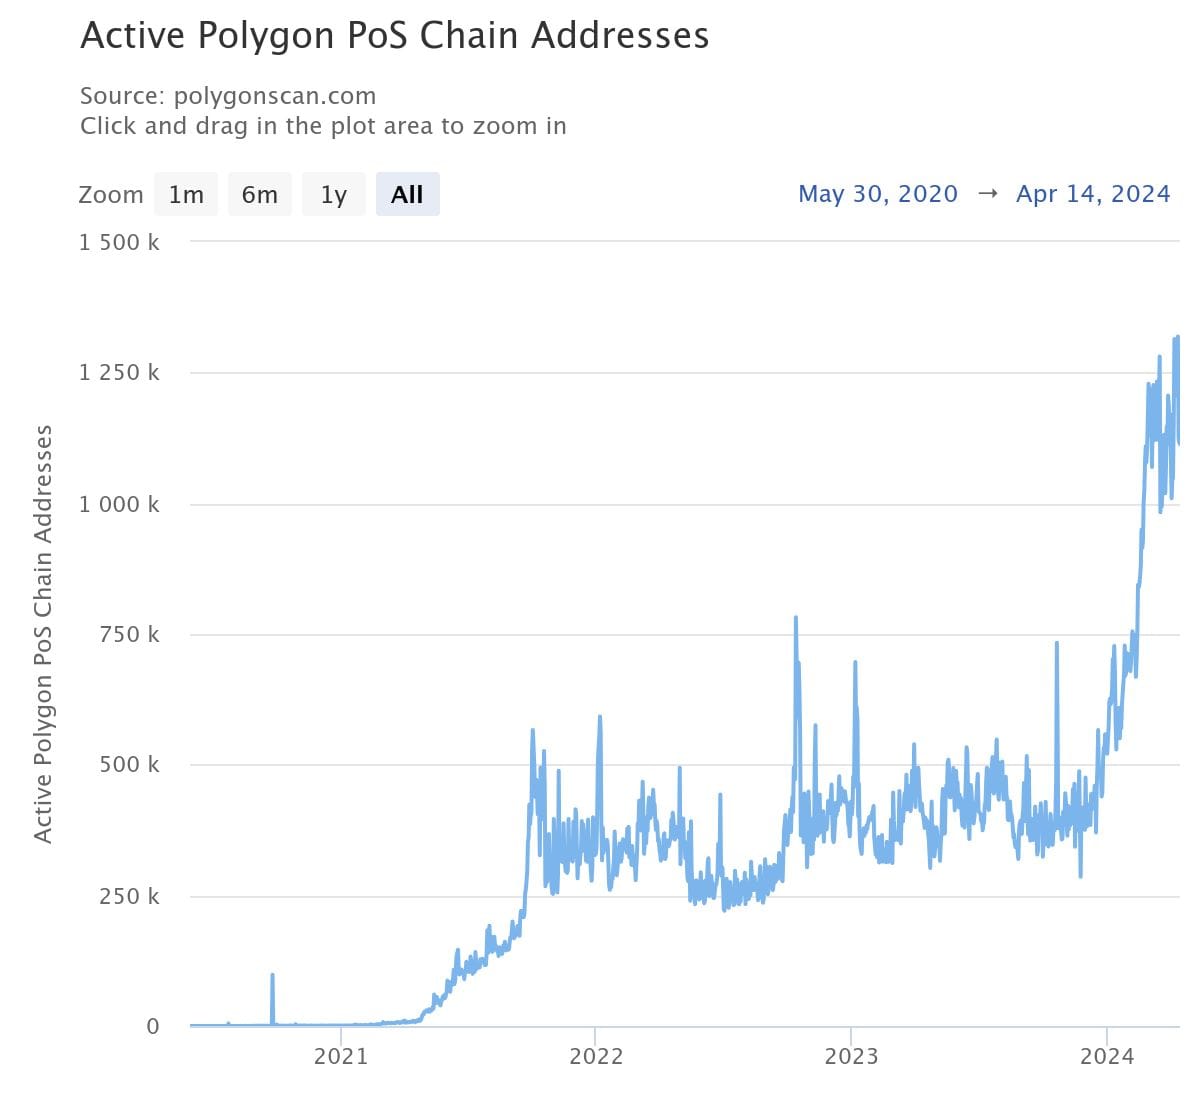 Active addresses on Polygon PoS